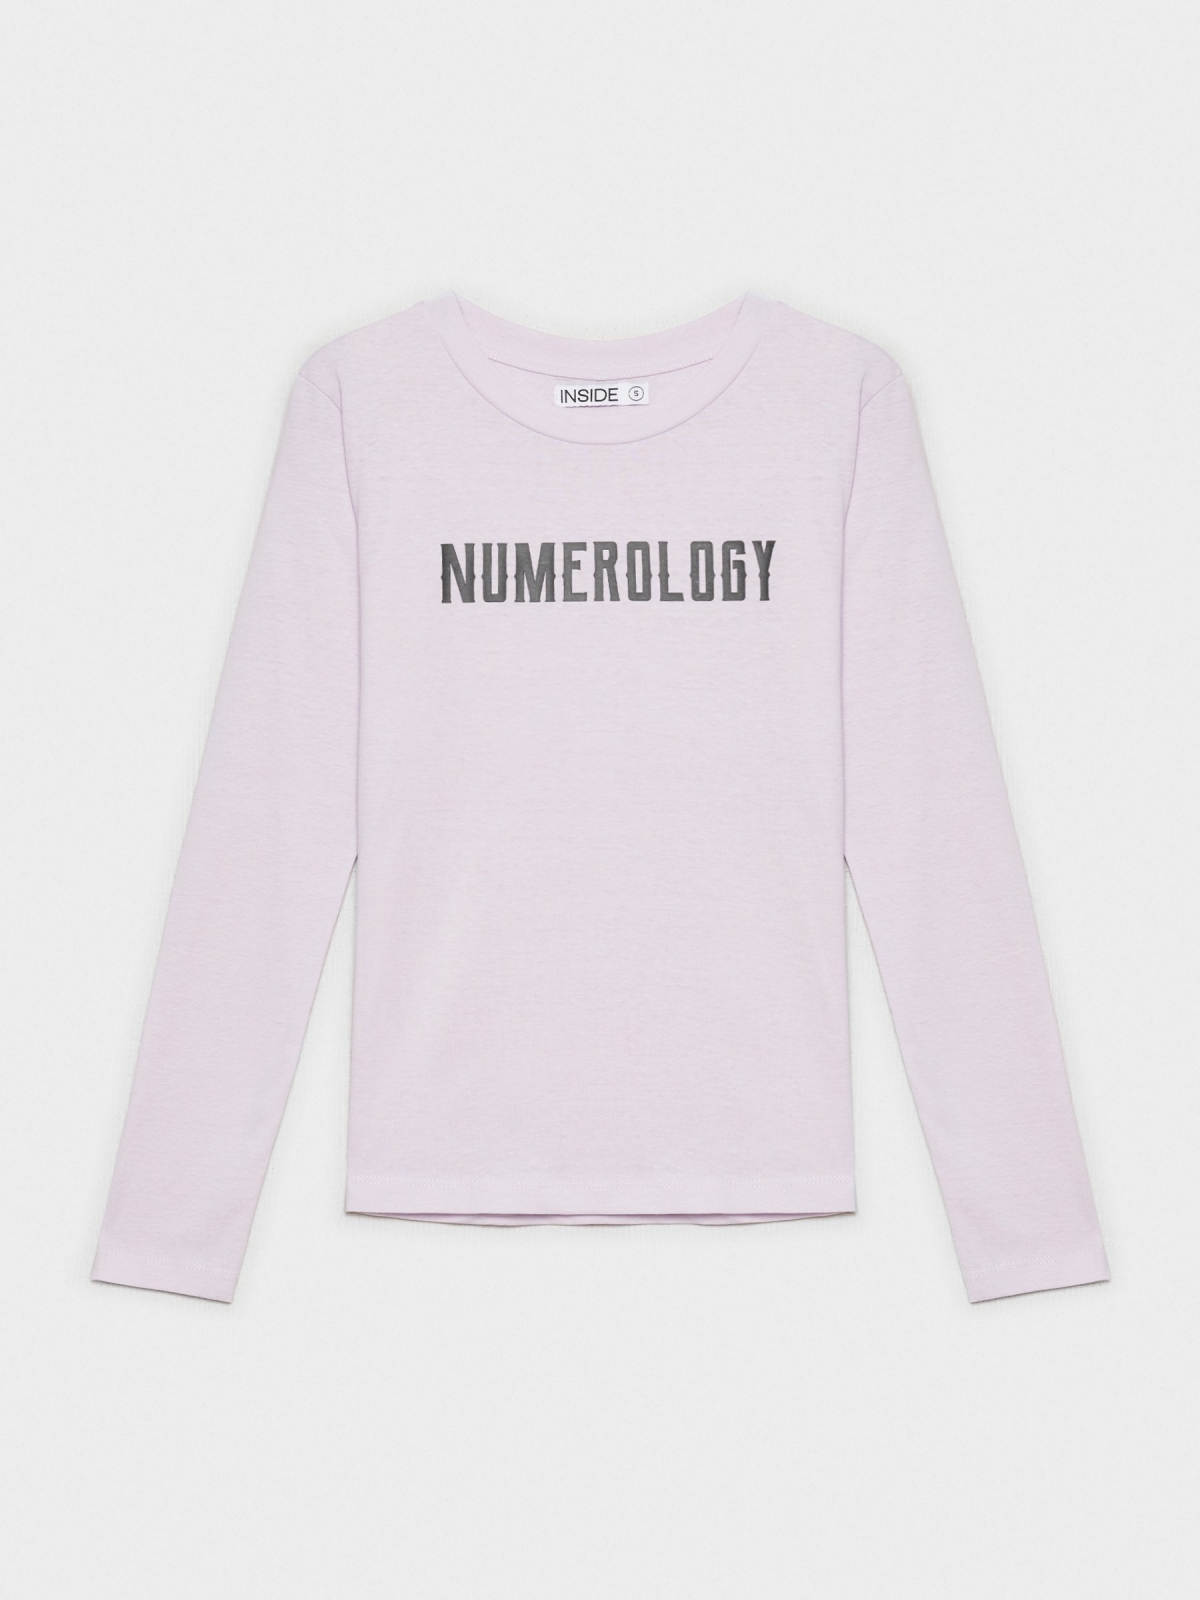  Camiseta negra numerology lila